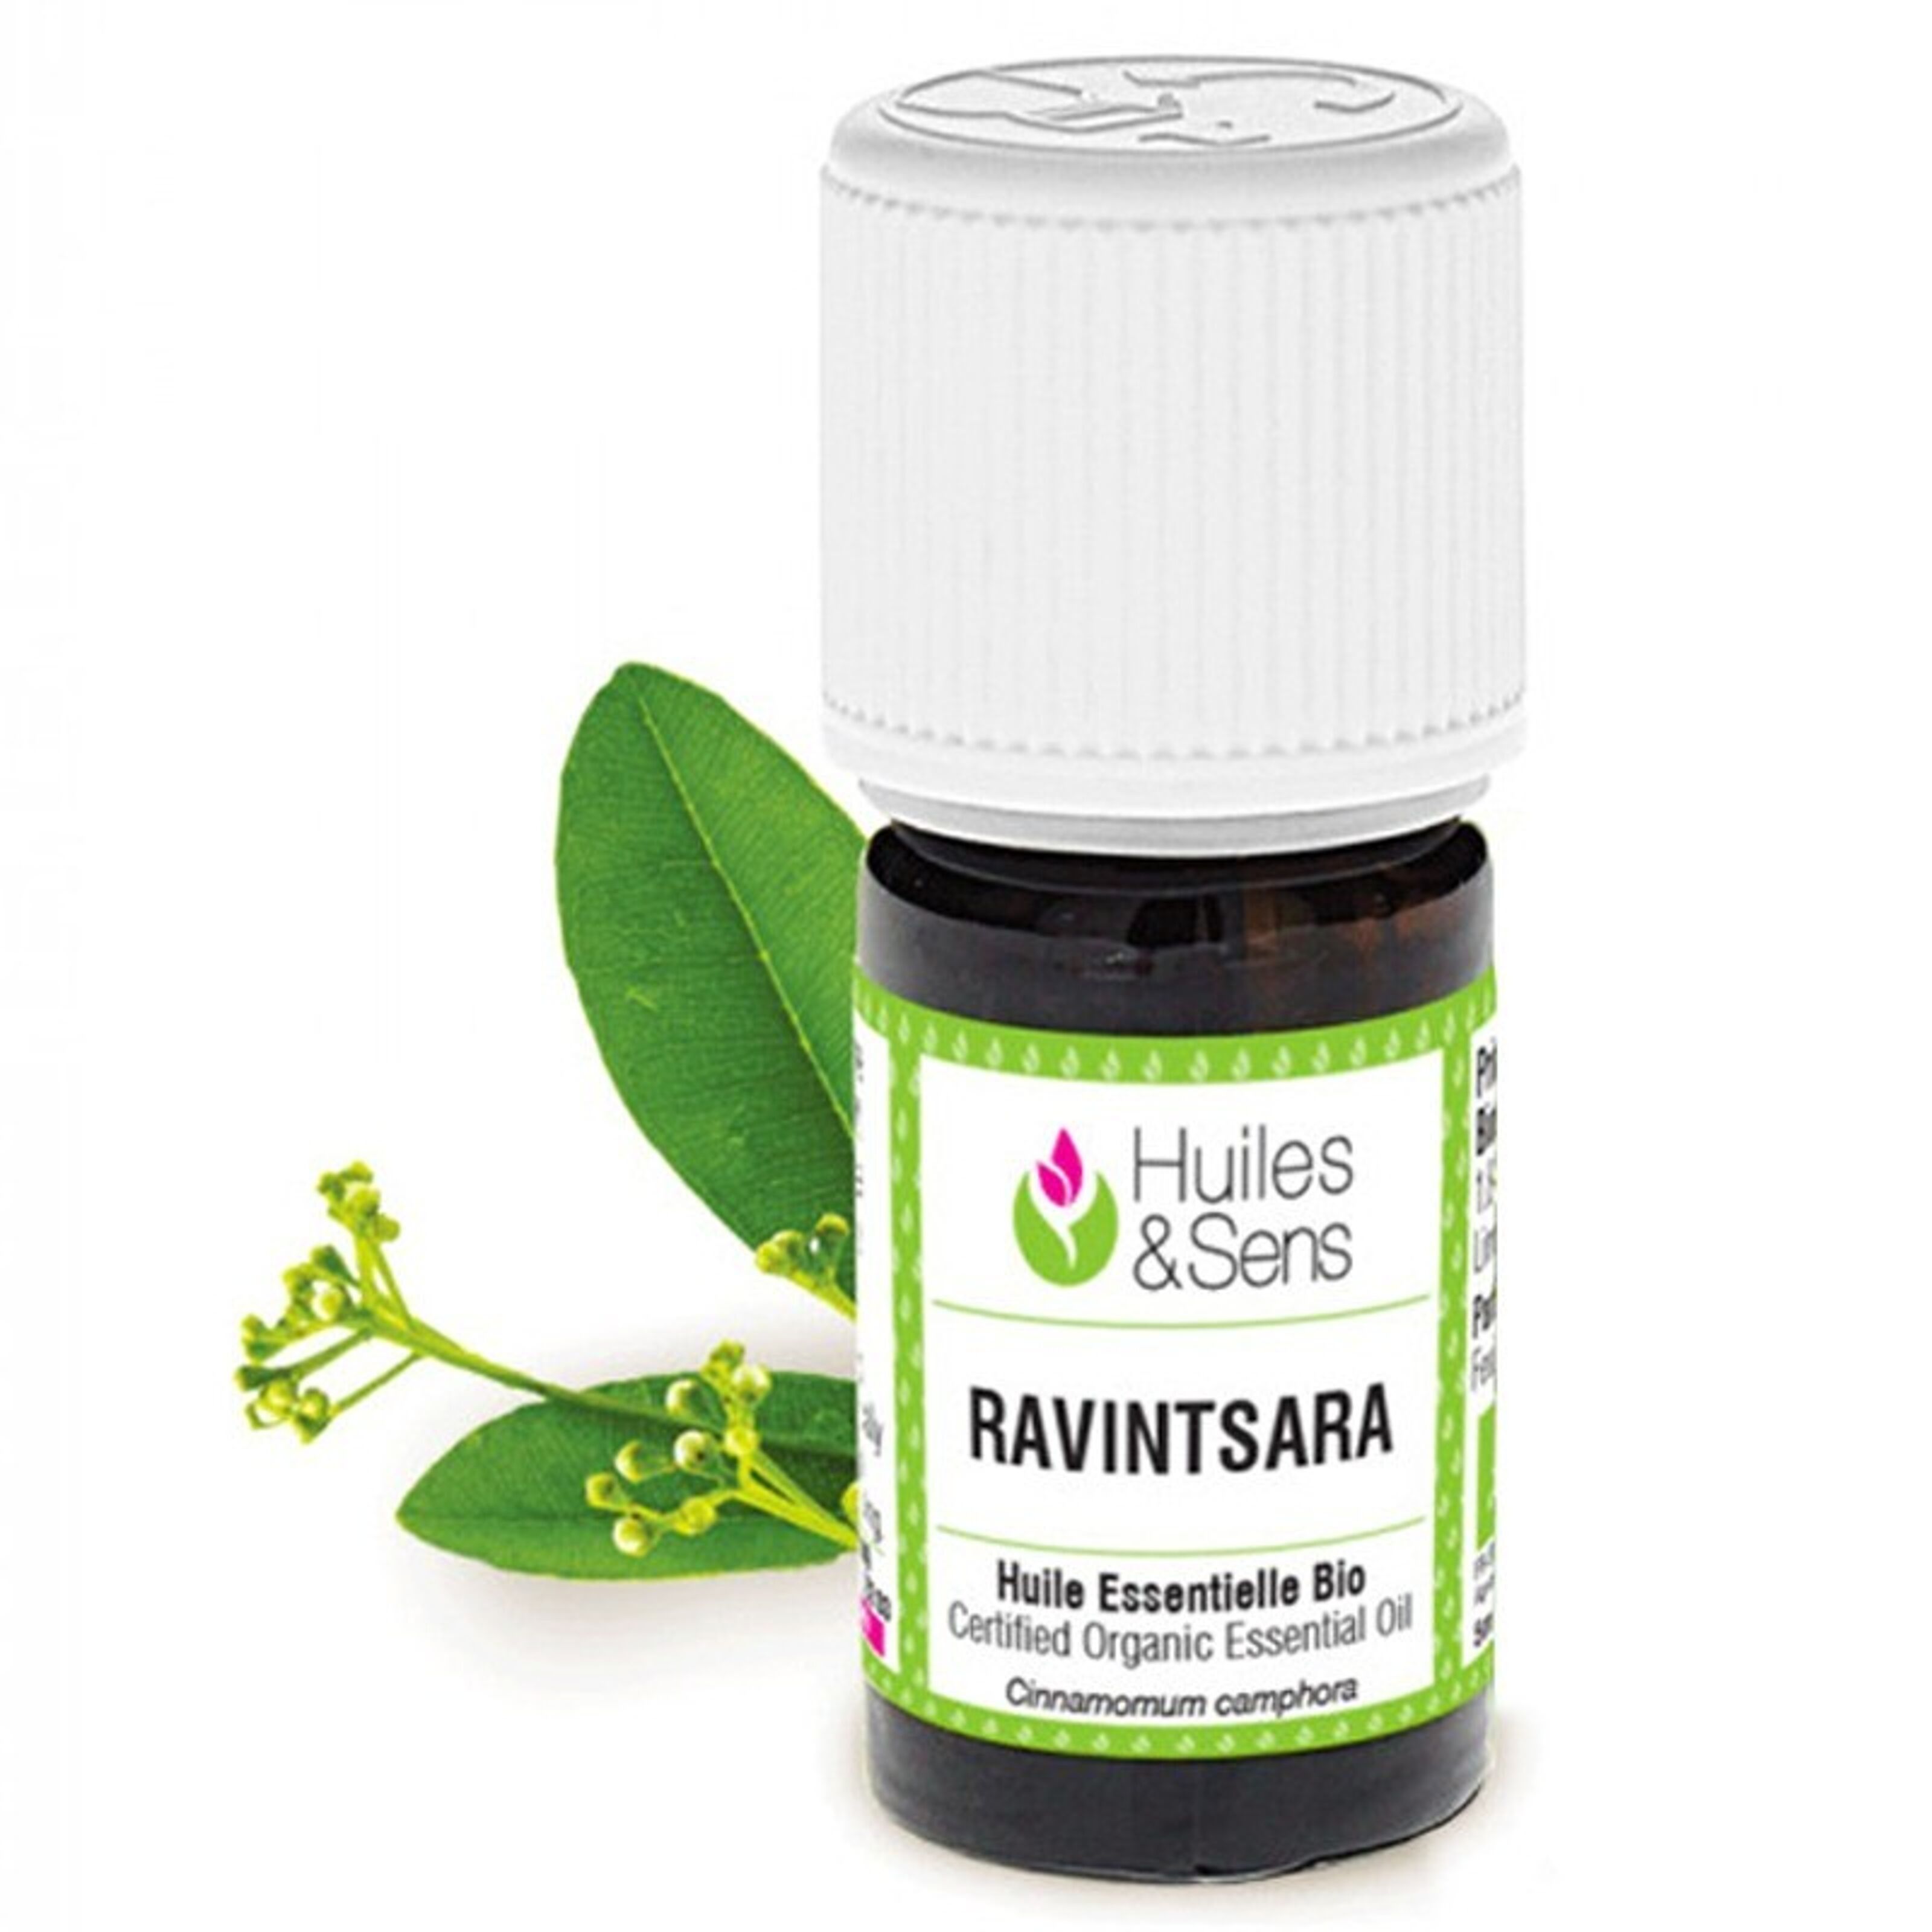 Buy wholesale Organic Ravintsara Essential Oil - 30 ml.